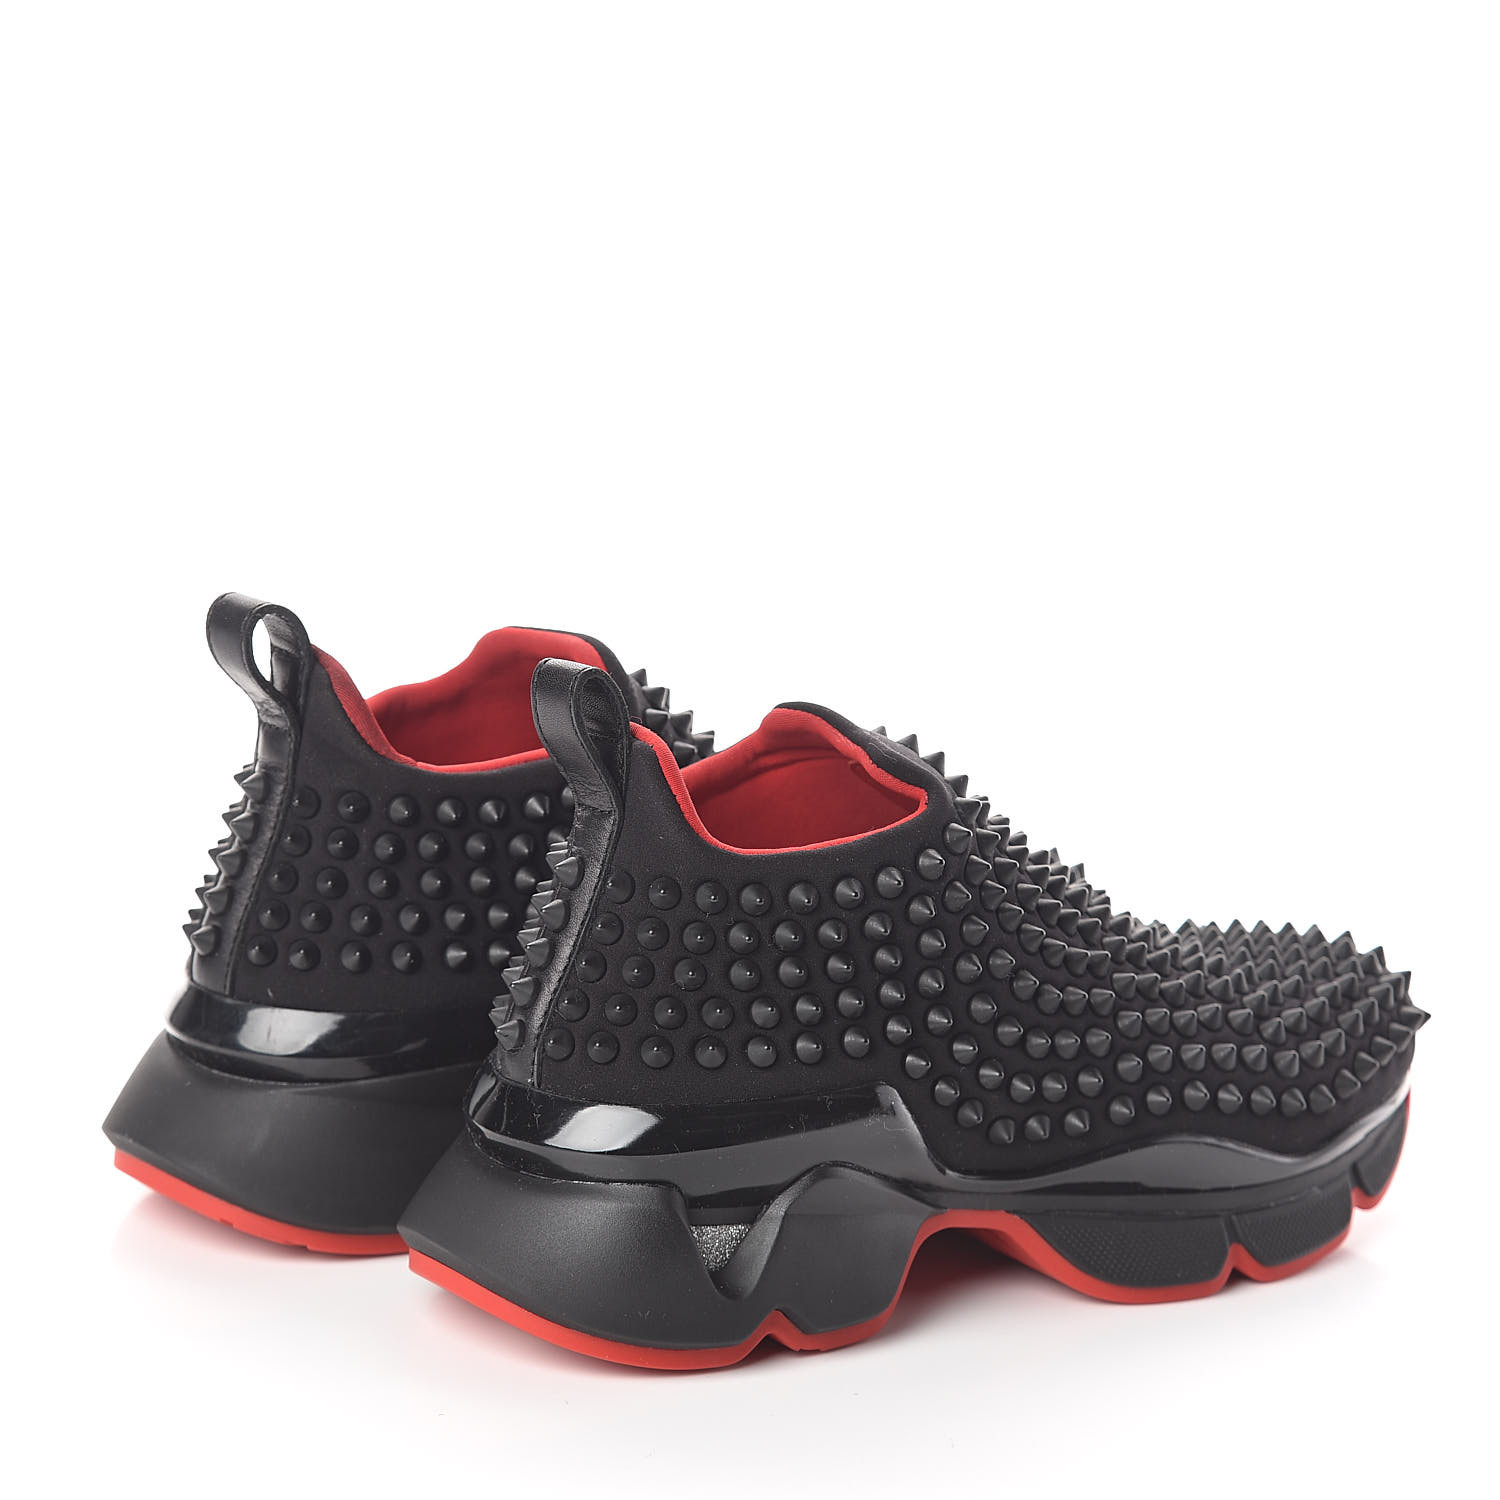 CHRISTIAN LOUBOUTIN Neoprene Spike Sock Donna Flat Sneakers 35 Black 523012